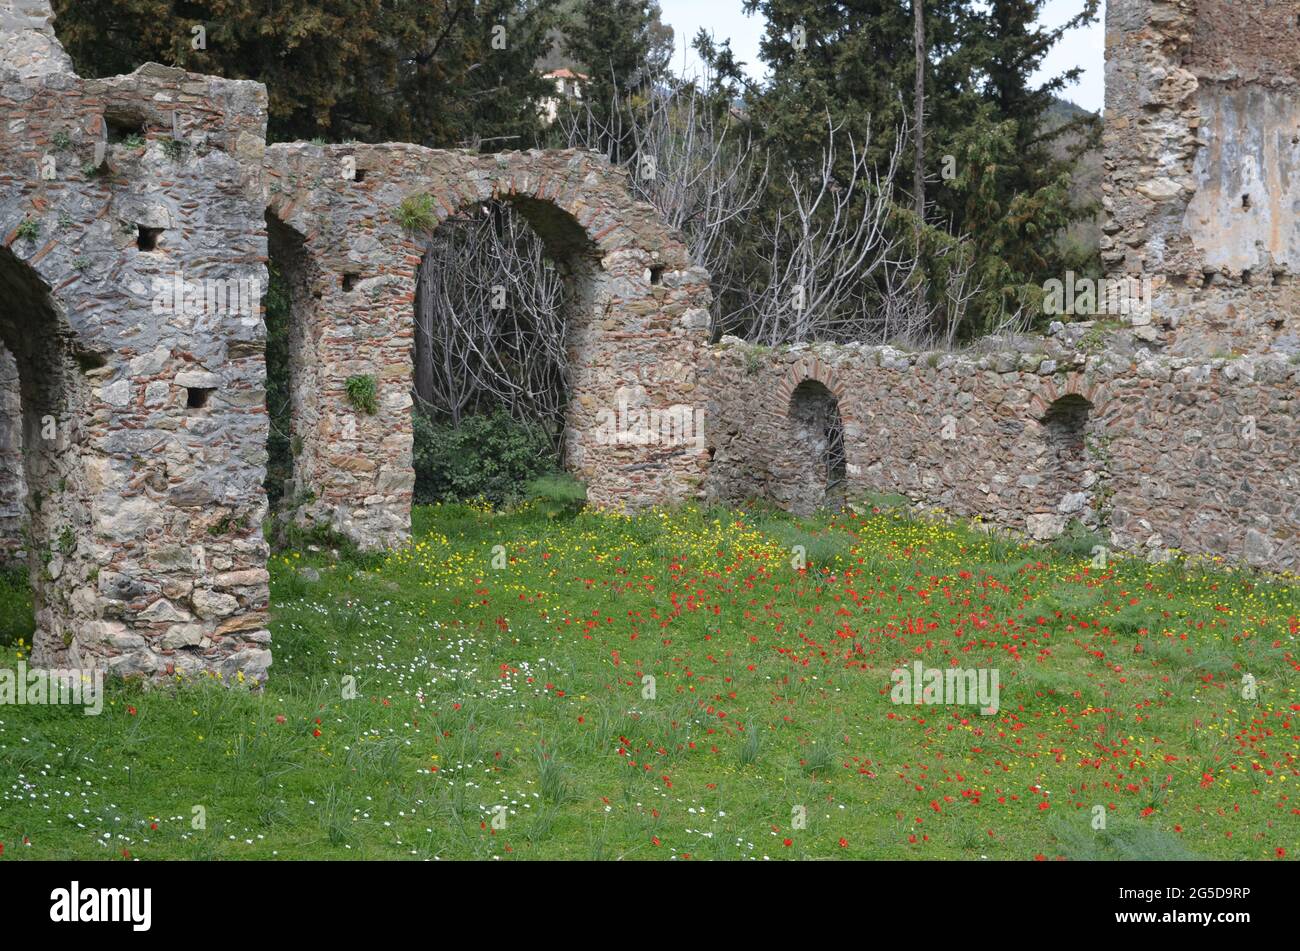 Castello medievale in Spagna Foto Stock